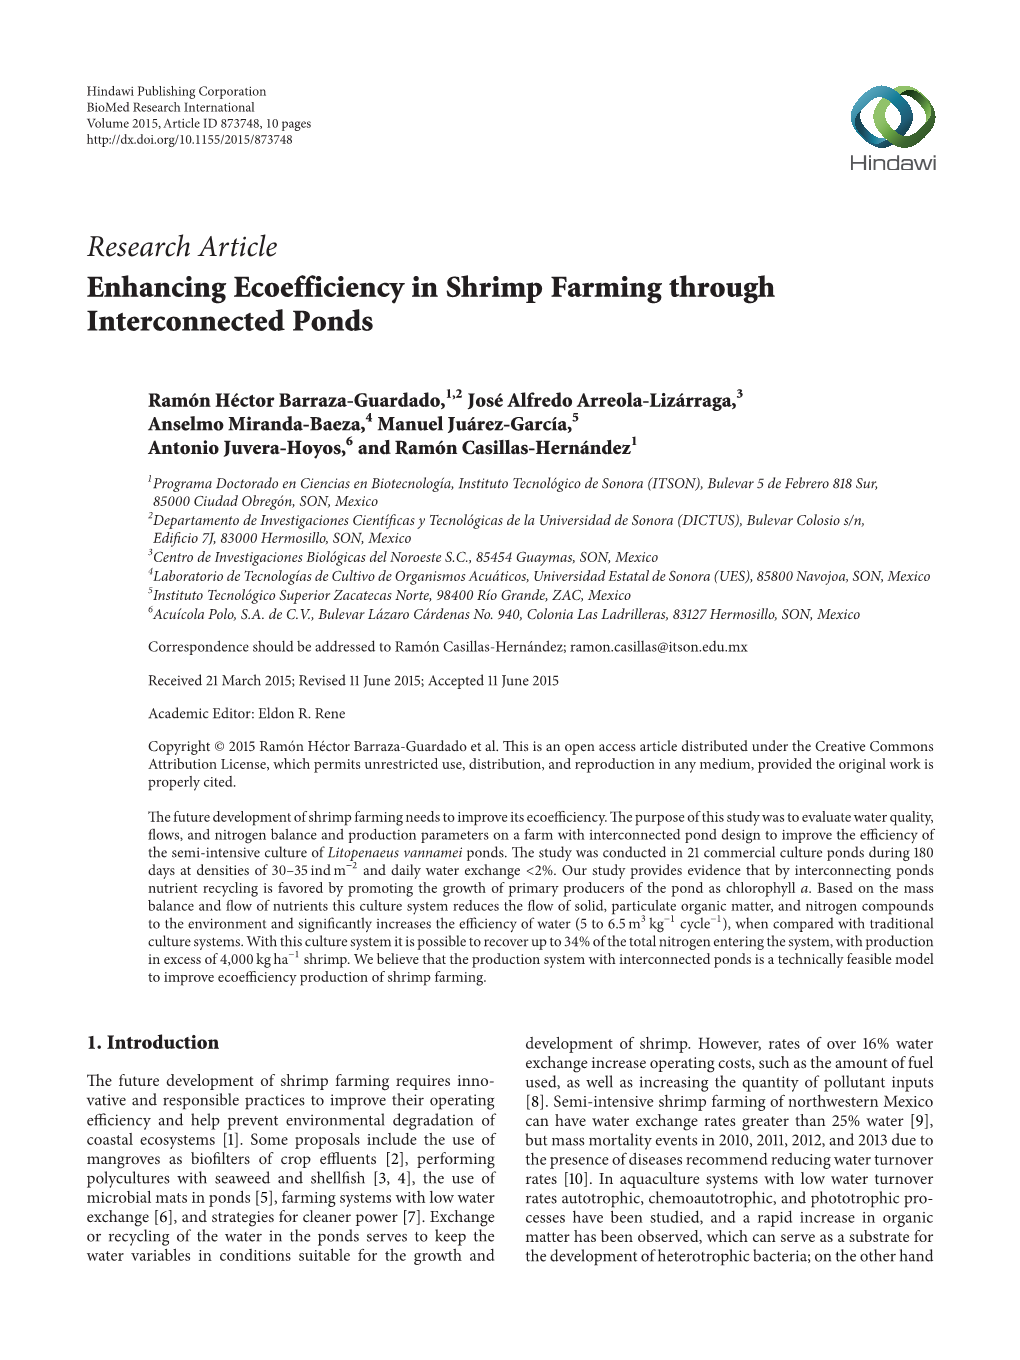 Enhancing Ecoefficiency in Shrimp Farming Through Interconnected Ponds